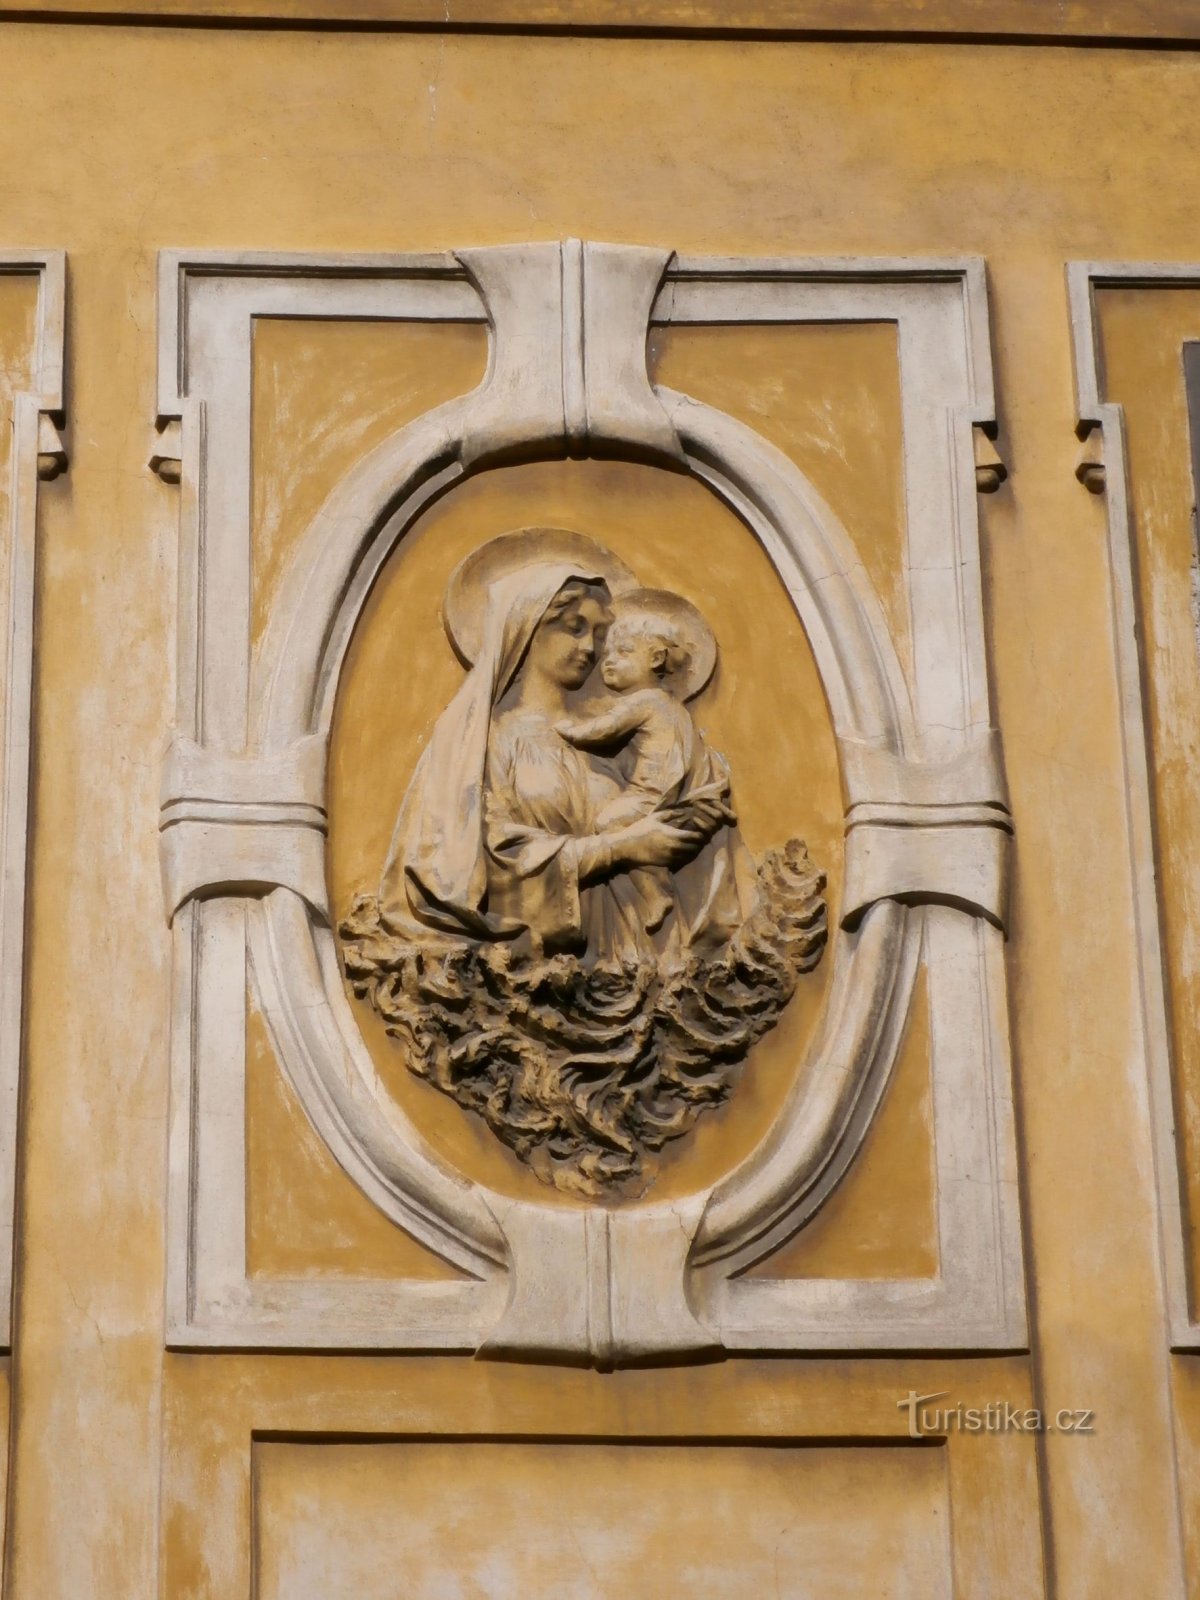 No. 59 の幼子イエスを抱く聖母マリアのレリーフ (Hradec Králové、2.8.2014 年 XNUMX 月 XNUMX 日)